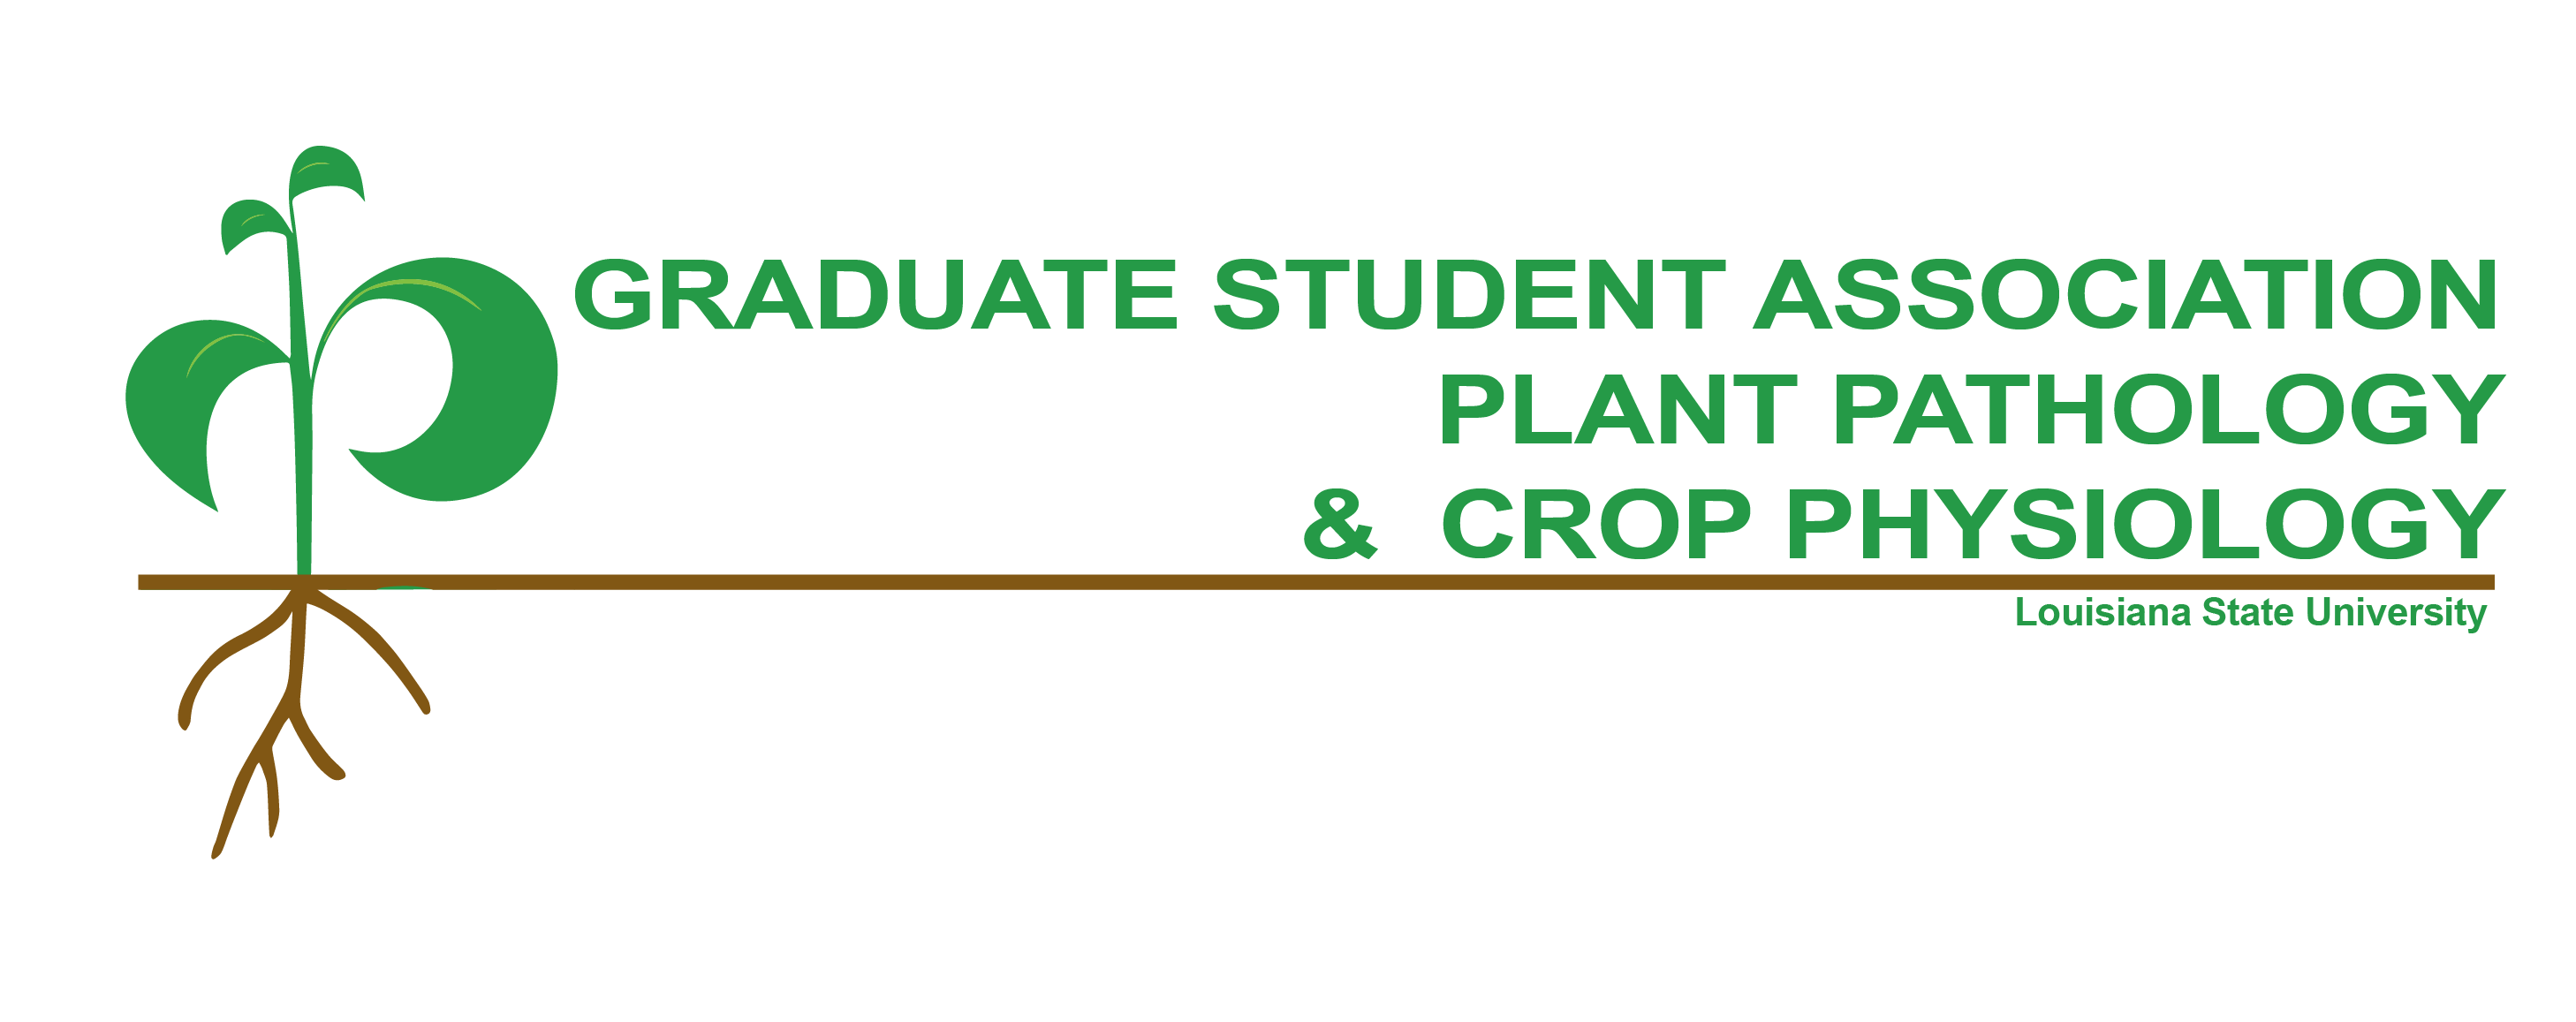 Graduate Student Association                       Plant Pathology & Crop Physiology at LSU